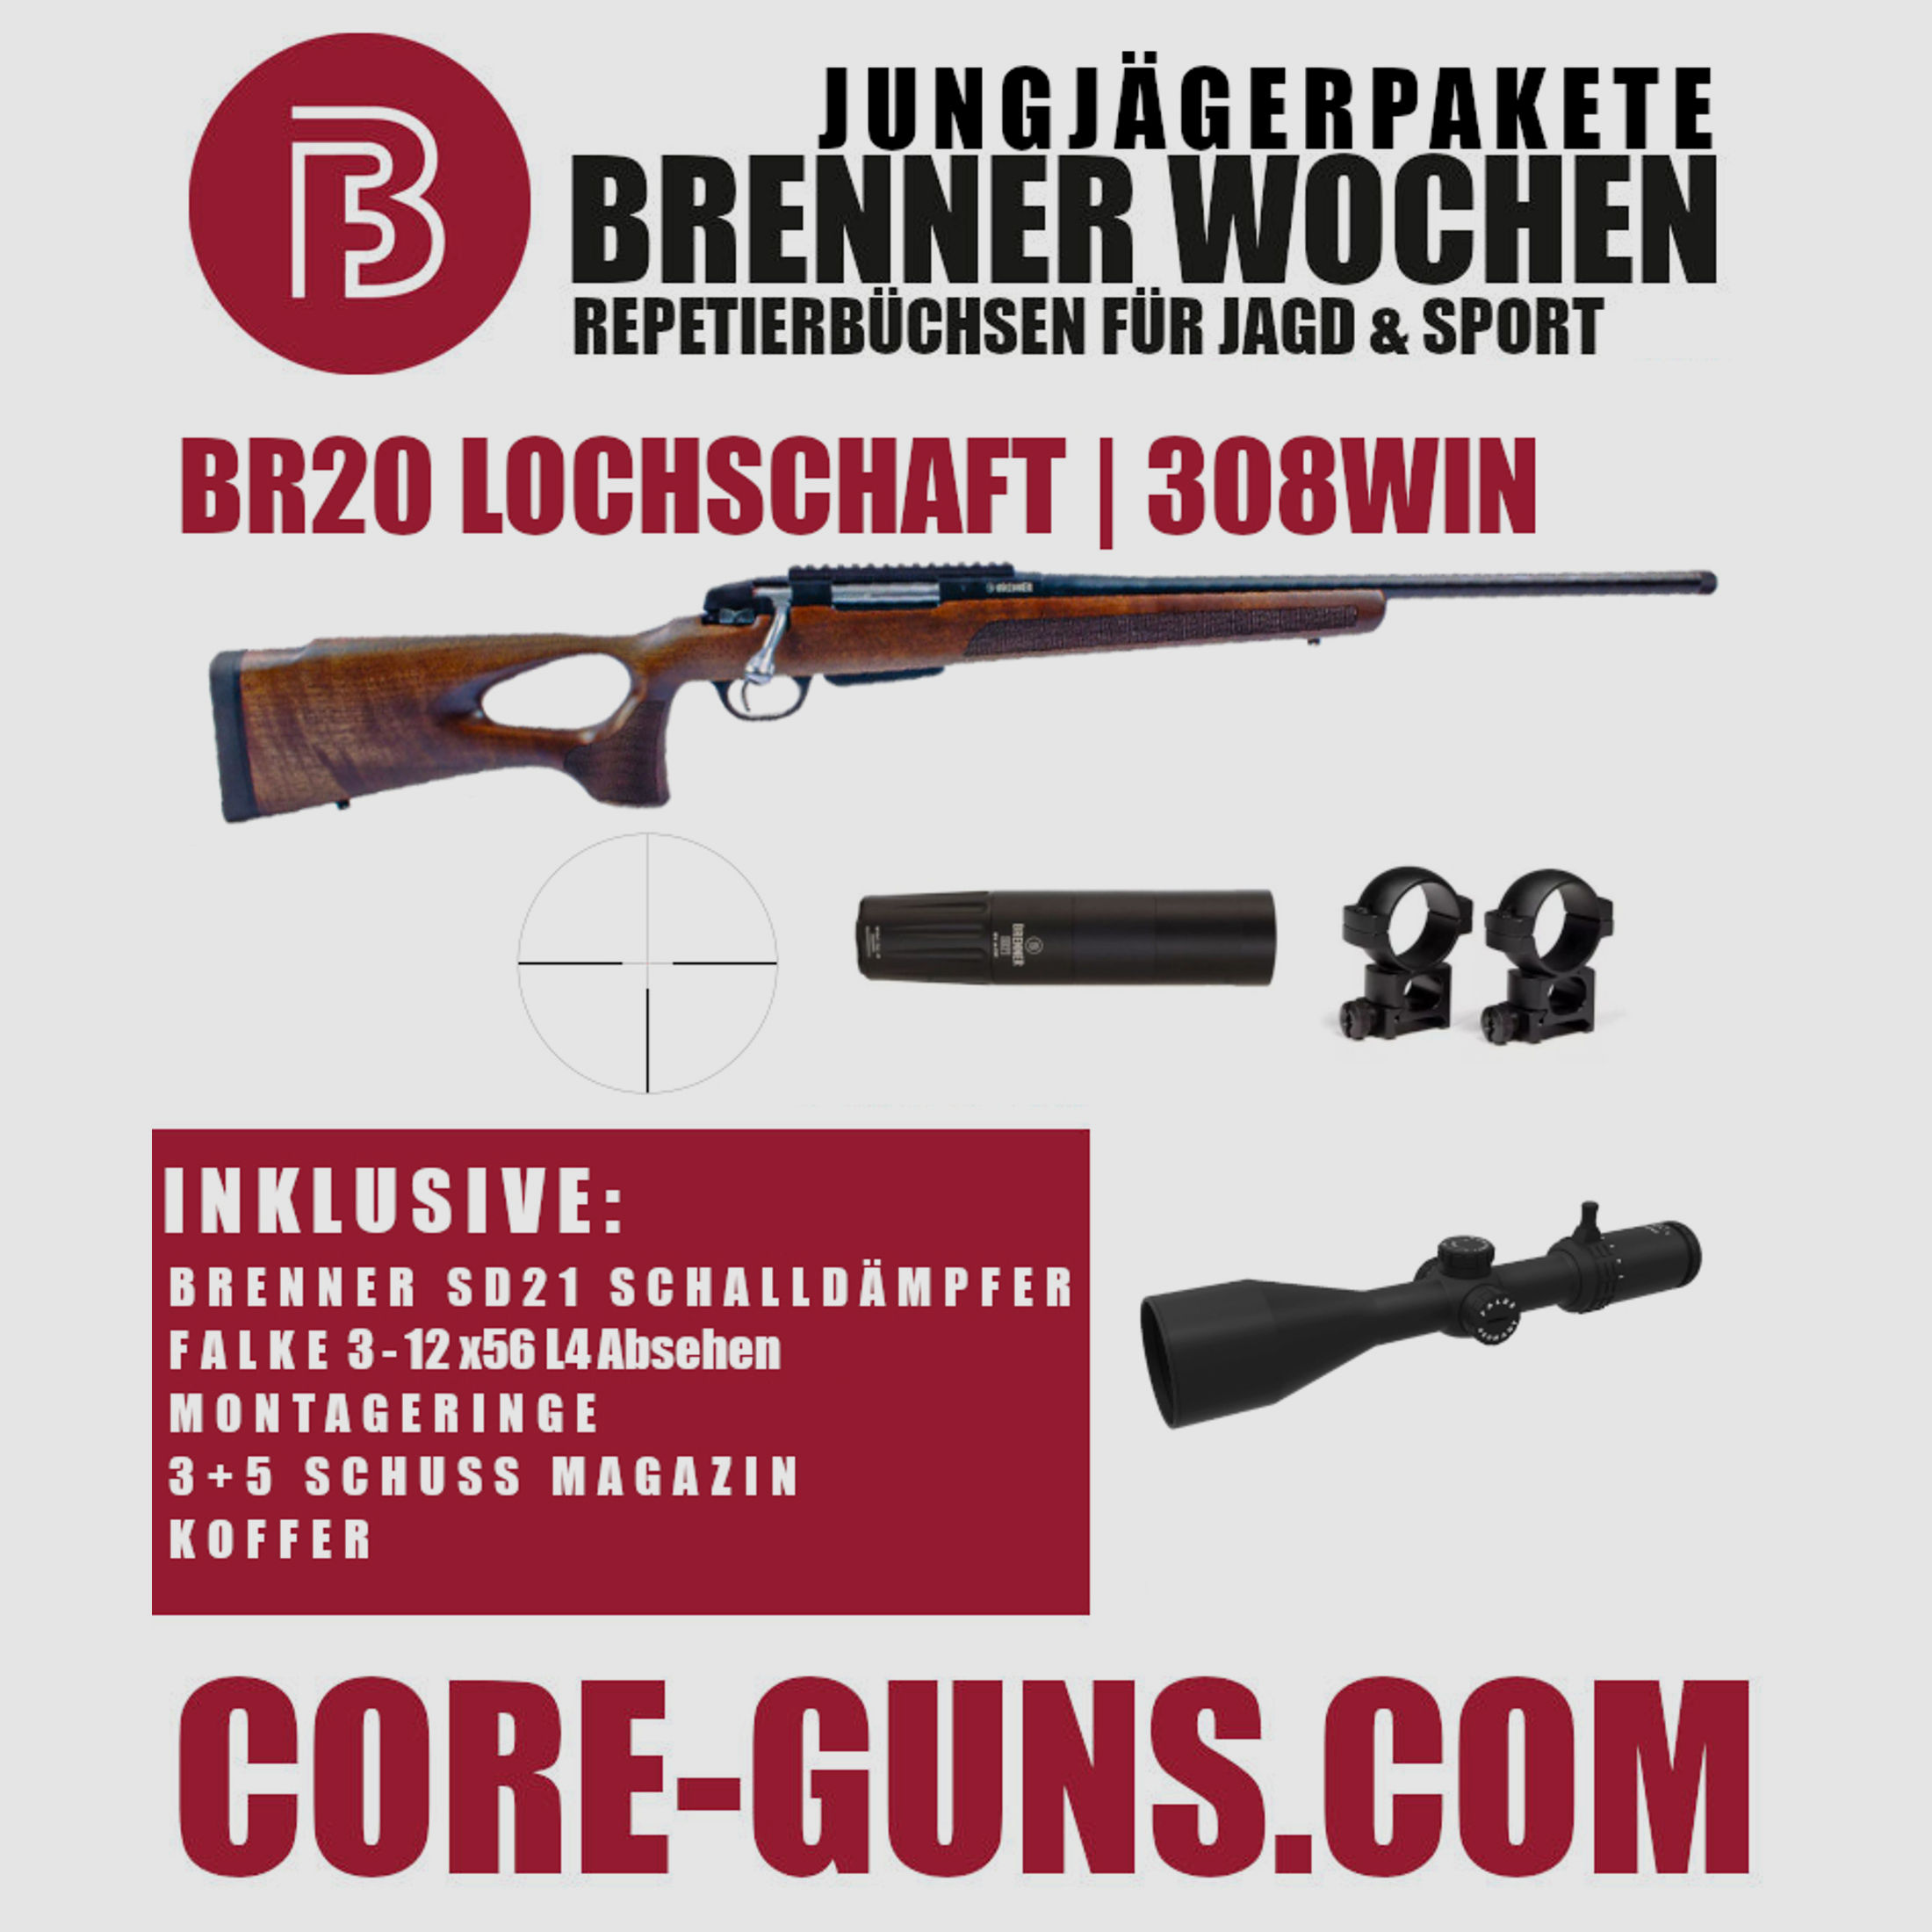 Brenner BR20 Lochschaft + Brenner Schalldämpfer SD21 + Falke 3-12x56 + Montageringe - Jungjägerspecial Brenner BR20 kaufen